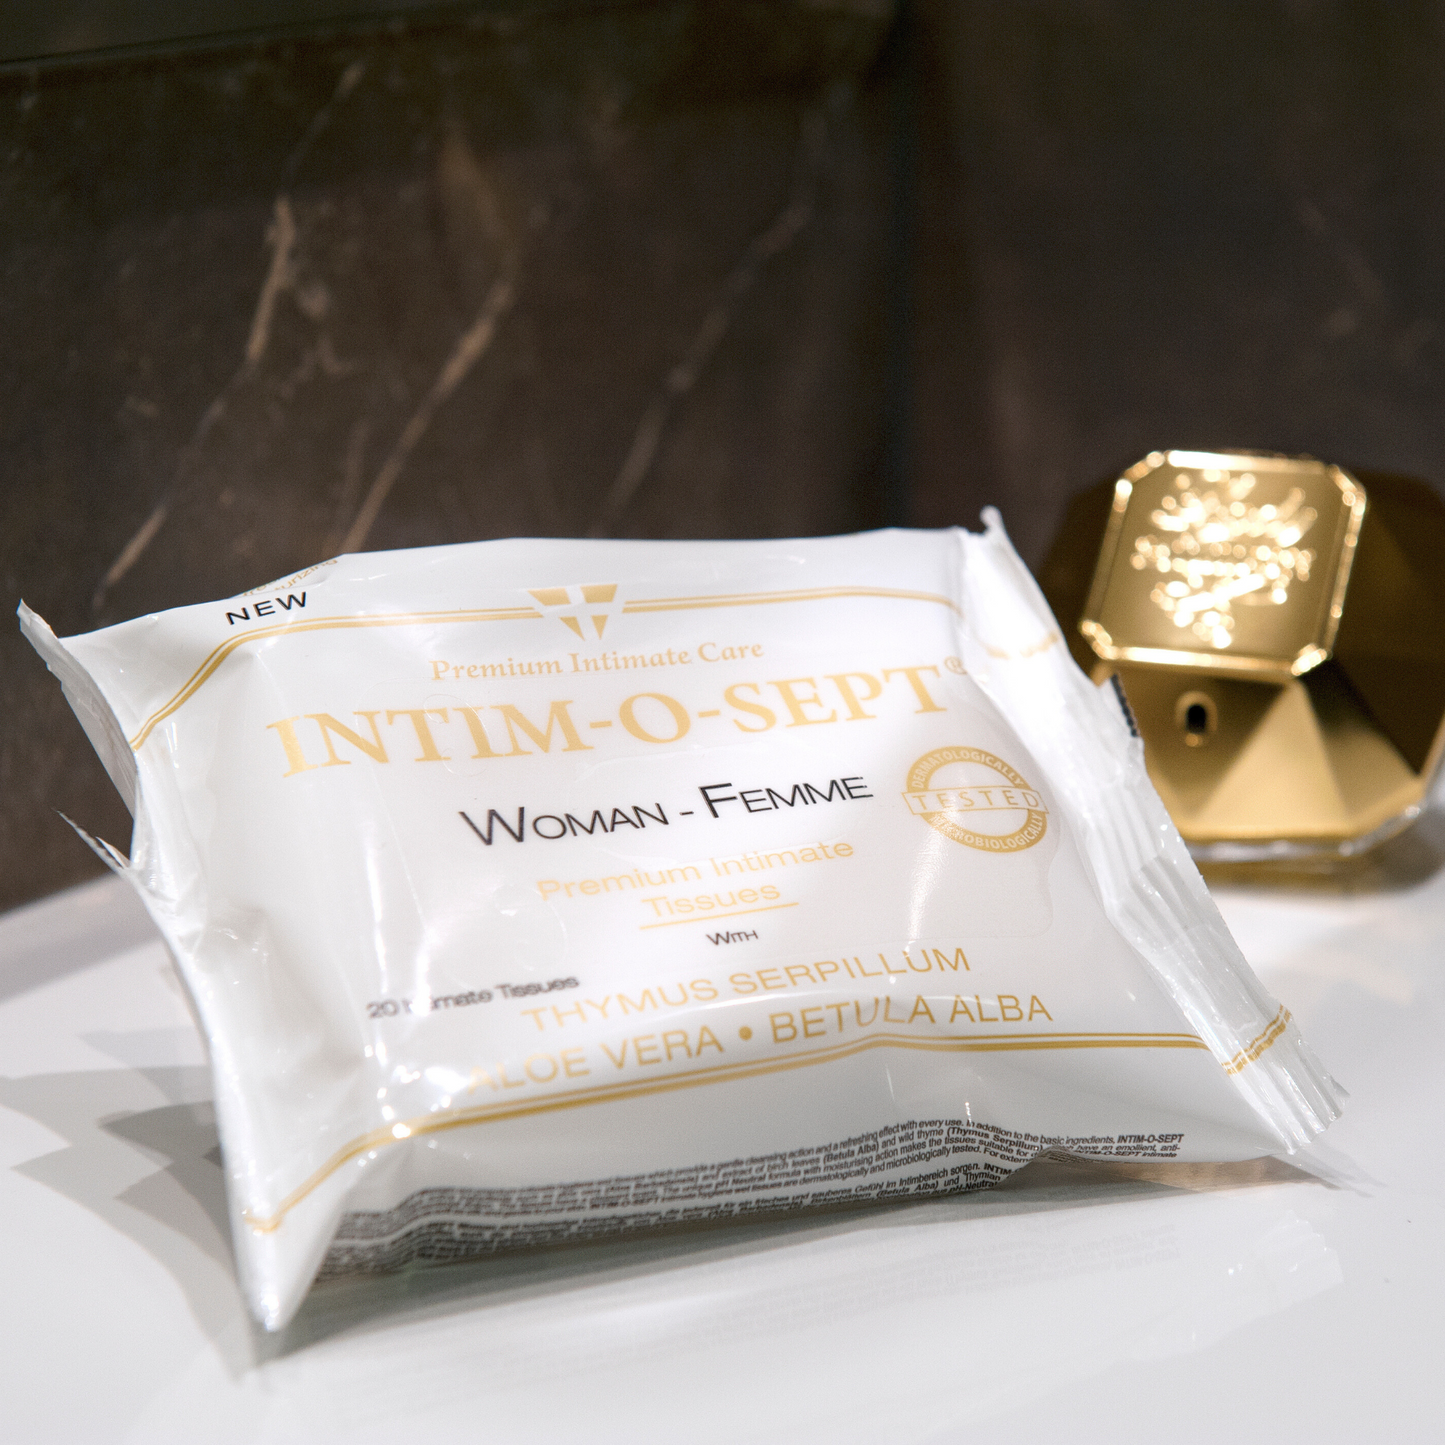 INTIM-O-SEPT Premium Intimate Tissues WOMAN